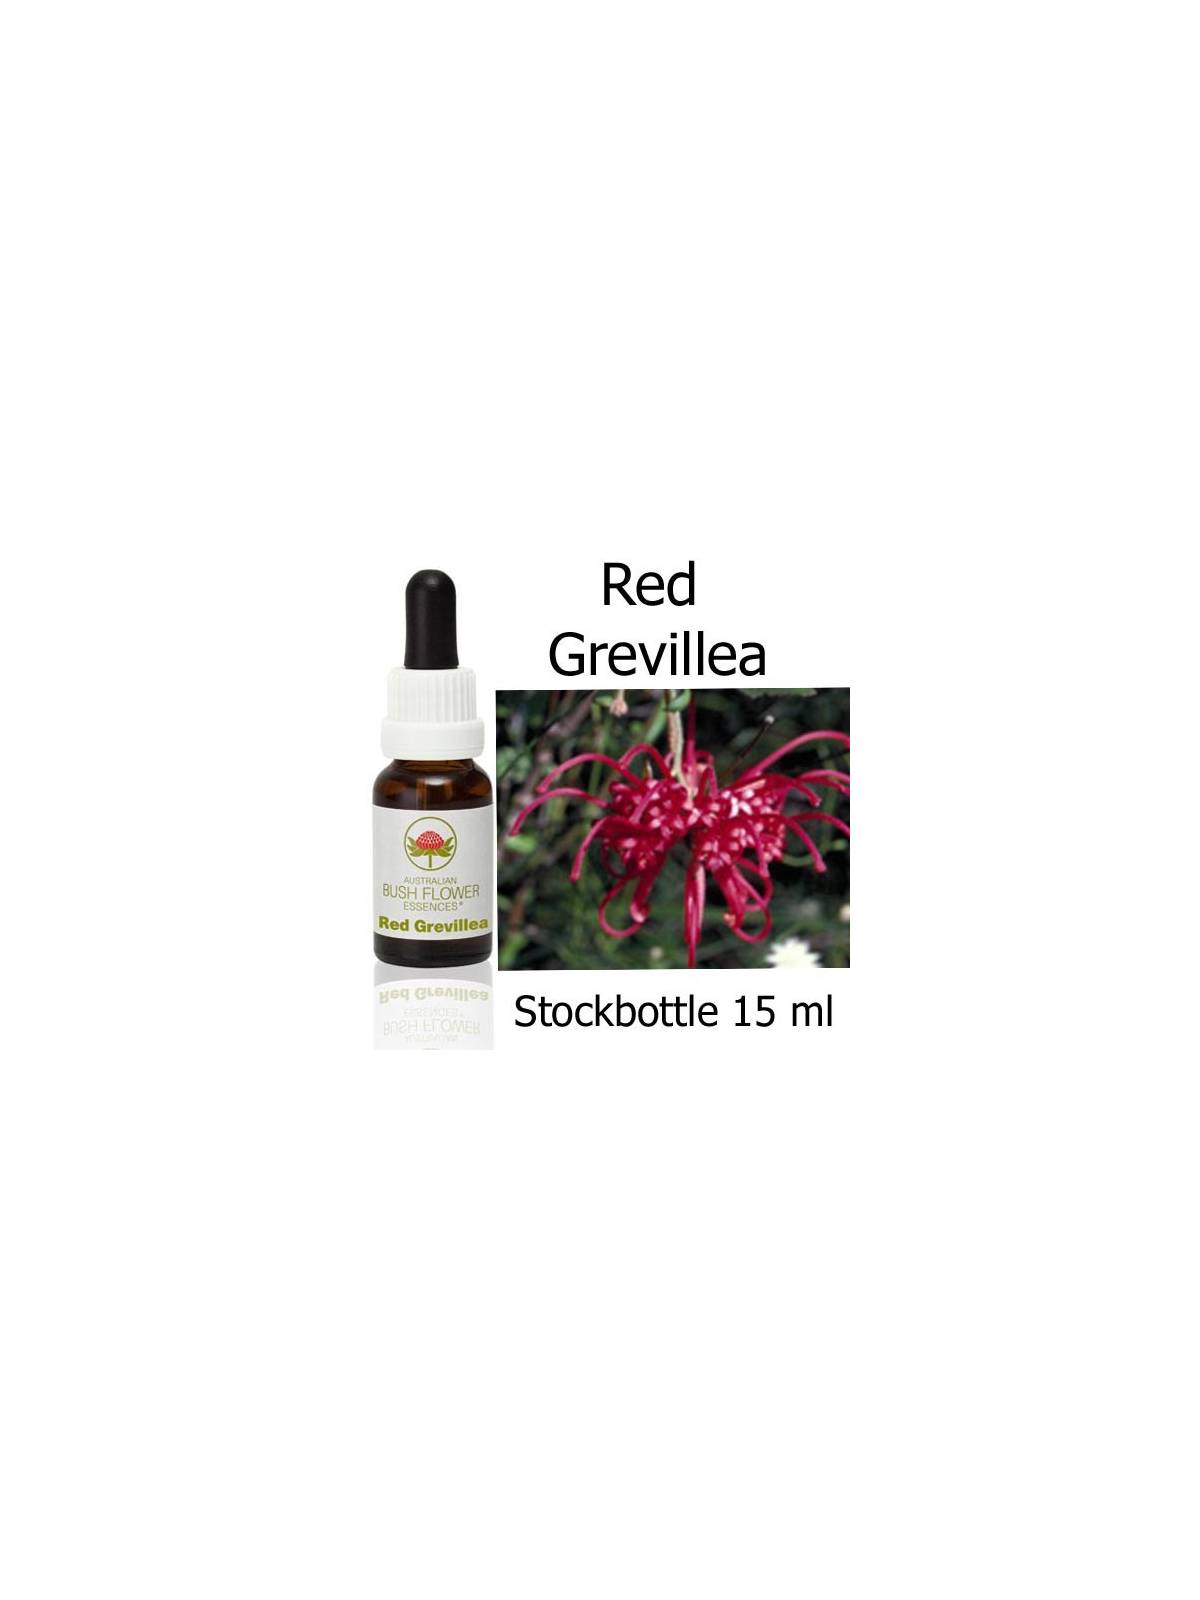 Red Grevillea Australian Bush Flower Essences